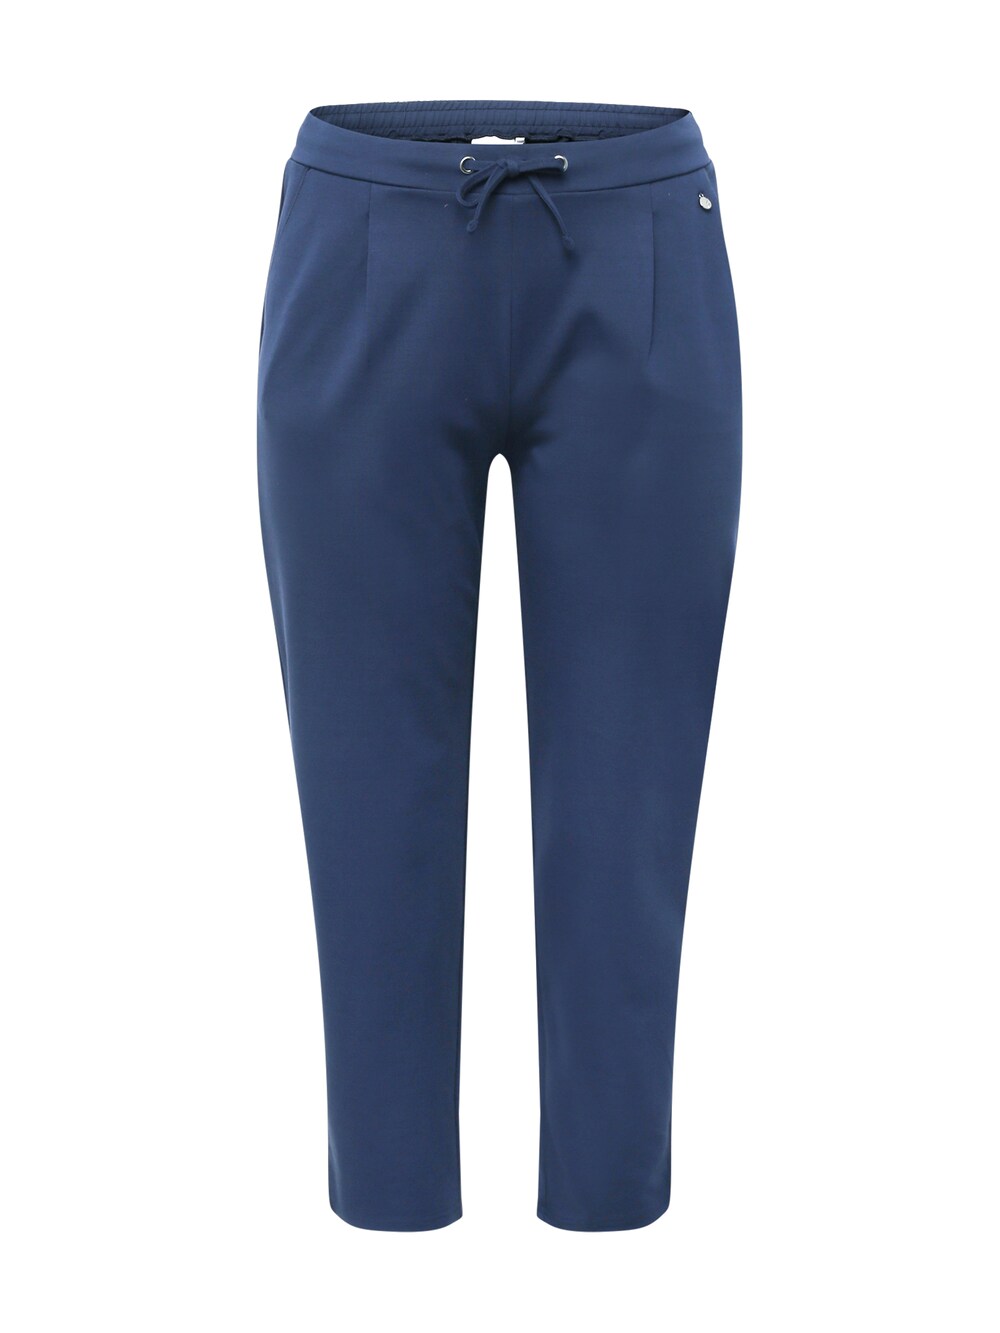 Узкие брюки со складками спереди Fransa Curve STRETCH, темно-синий узкие брюки со складками спереди fransa curve stretch коричневый